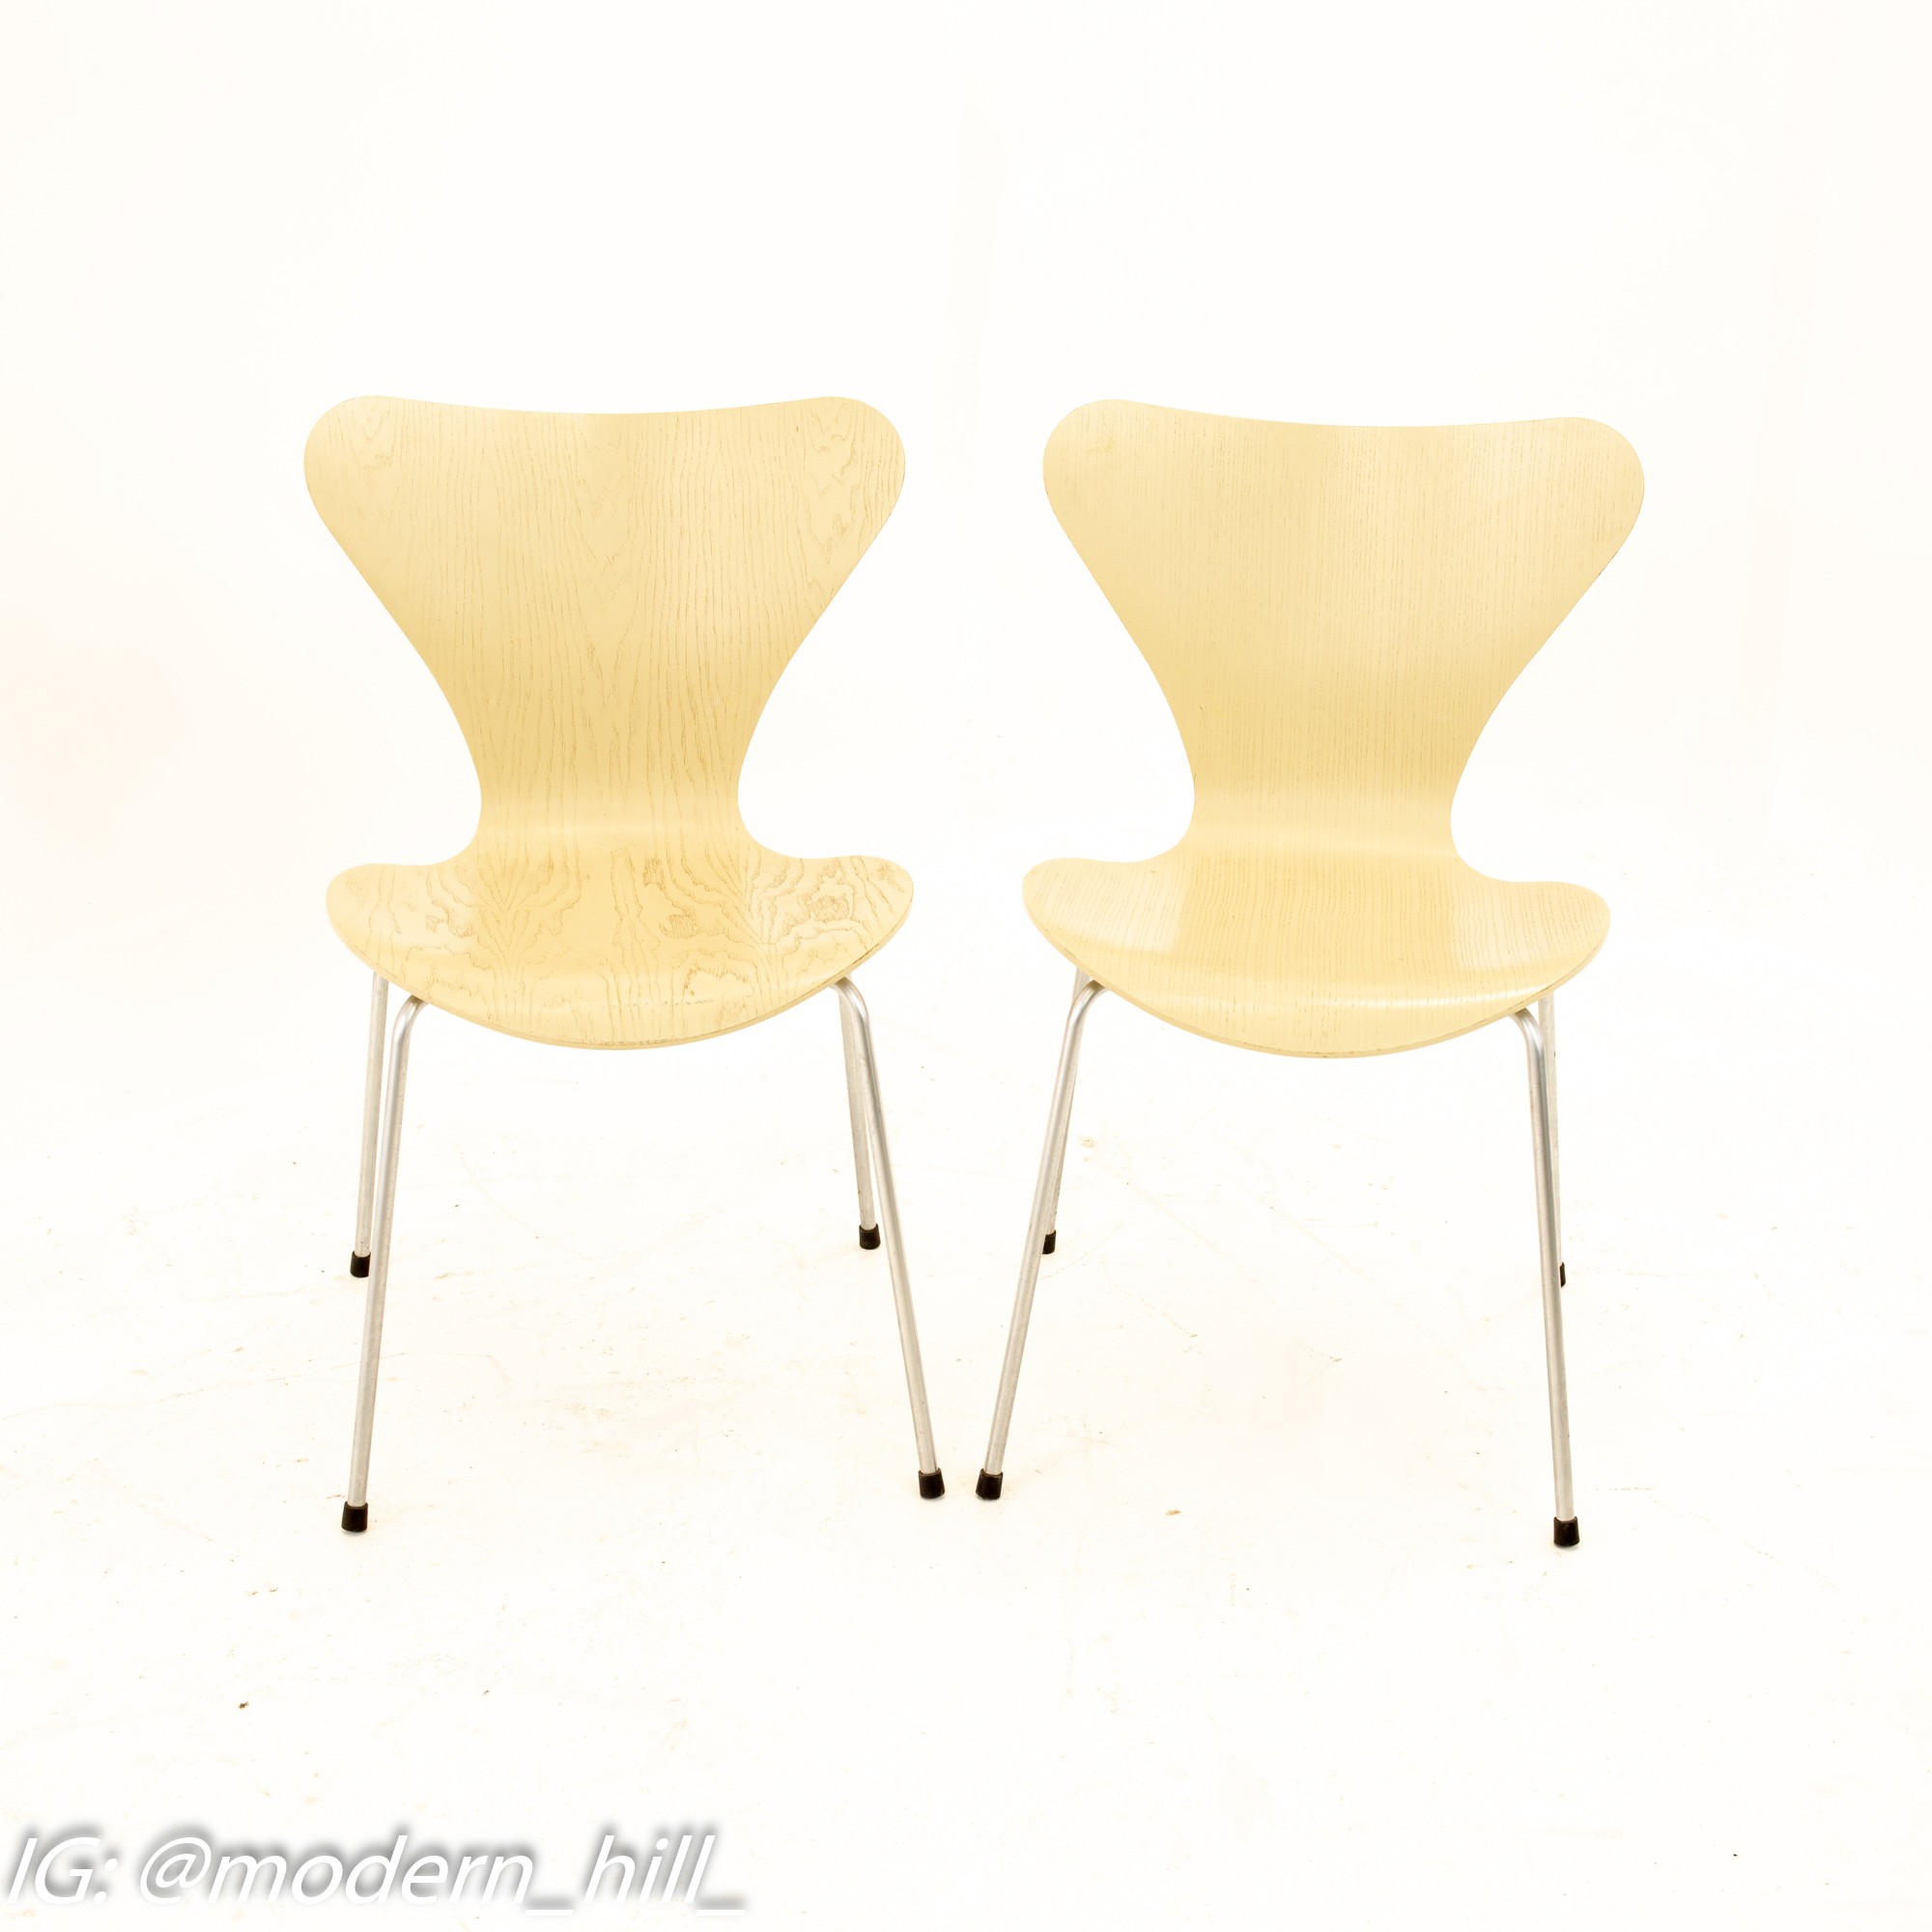 Arne Jacobsen for Fritz Hansen Mid Century Modern Series 7 Chairs - Set of 2